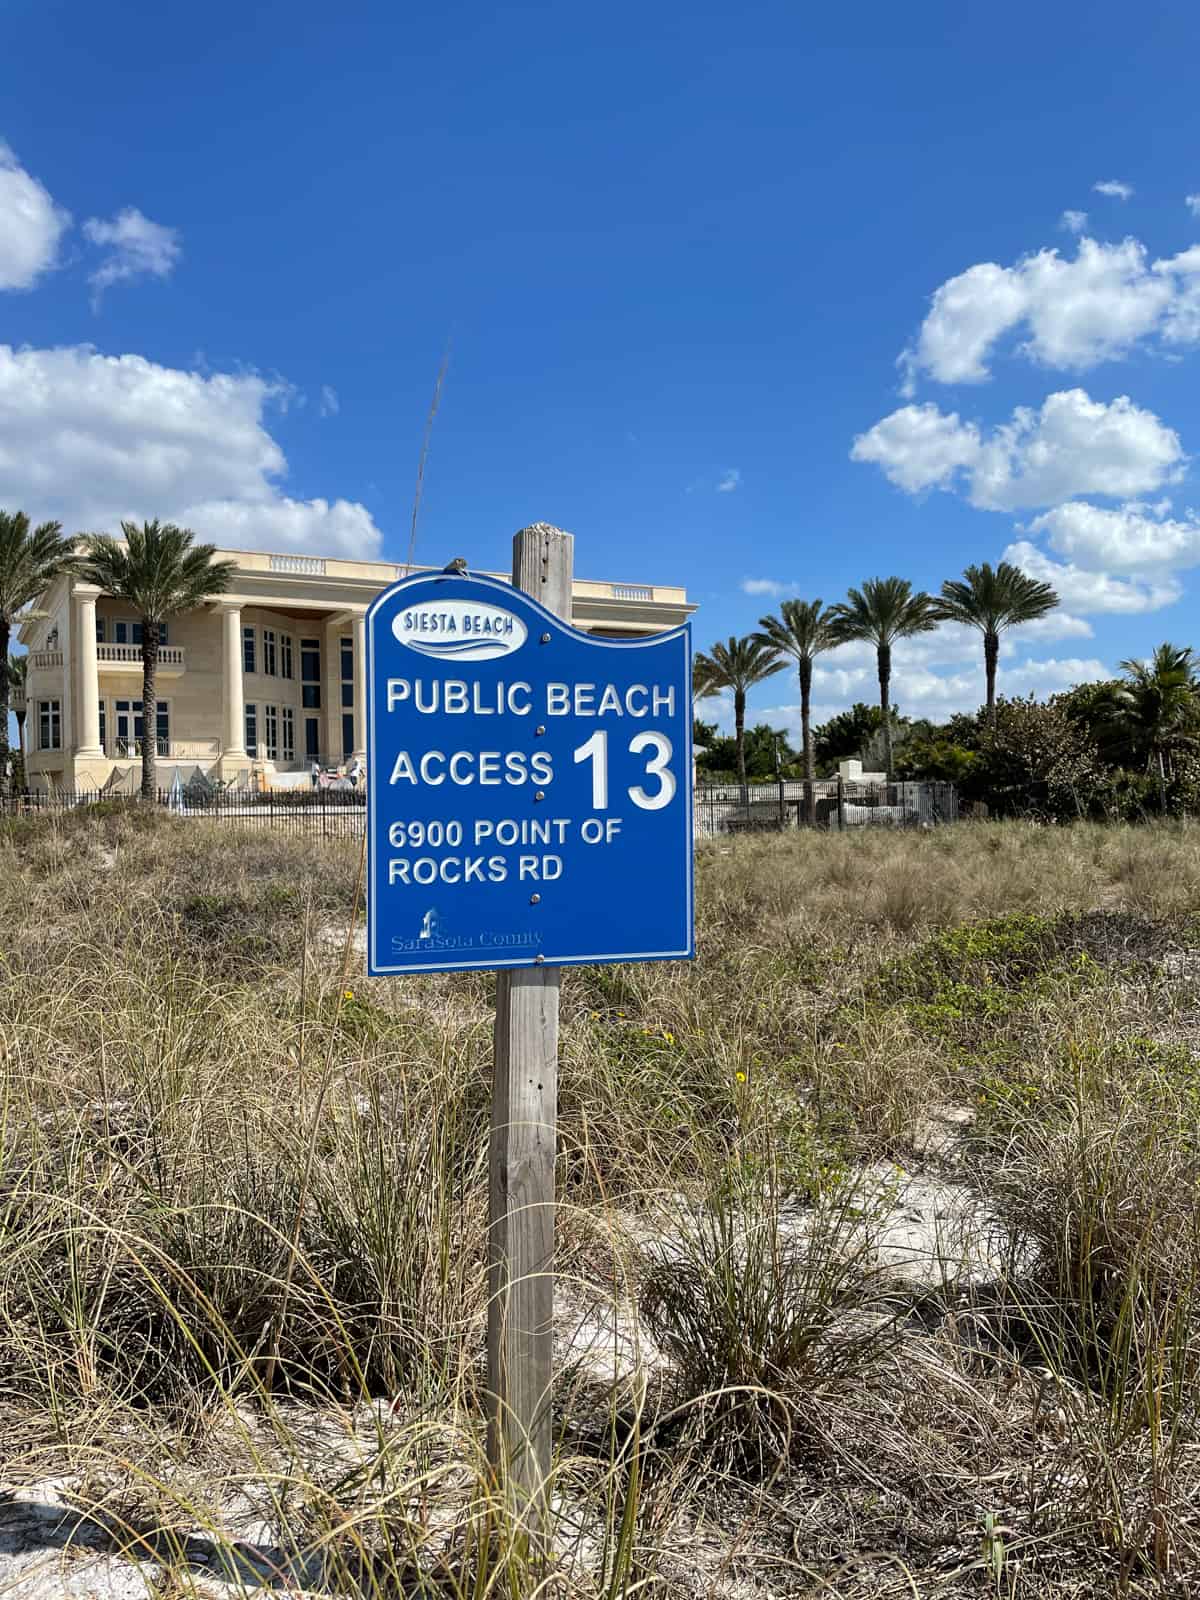 Public access sign at Siesta Key beach.